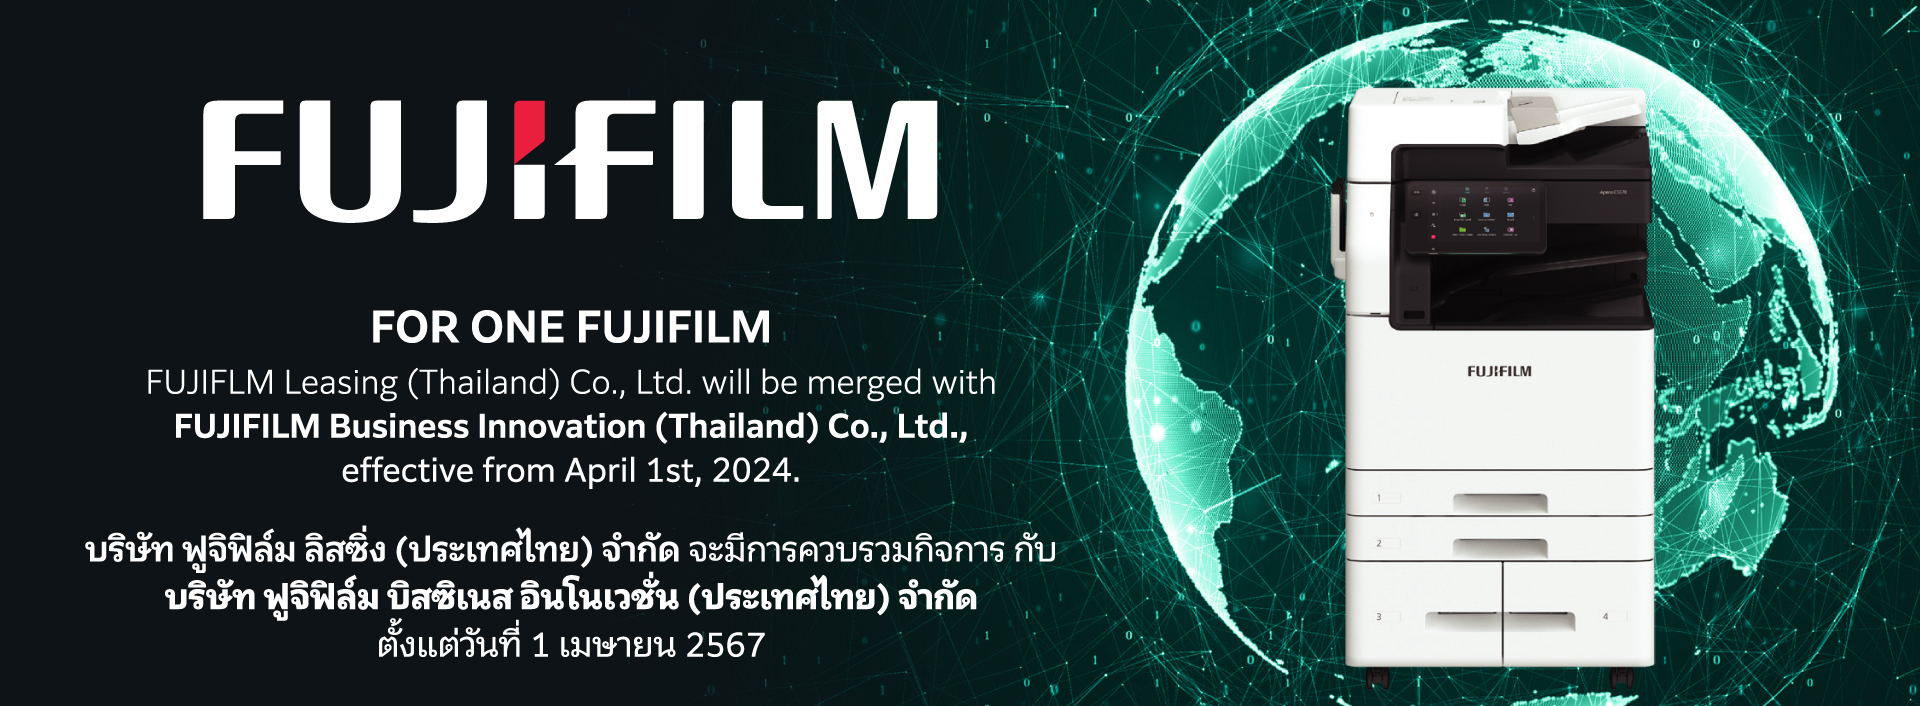 FUJIFILM Leasing Thailand Merged with FUJIFILM BI Thailand